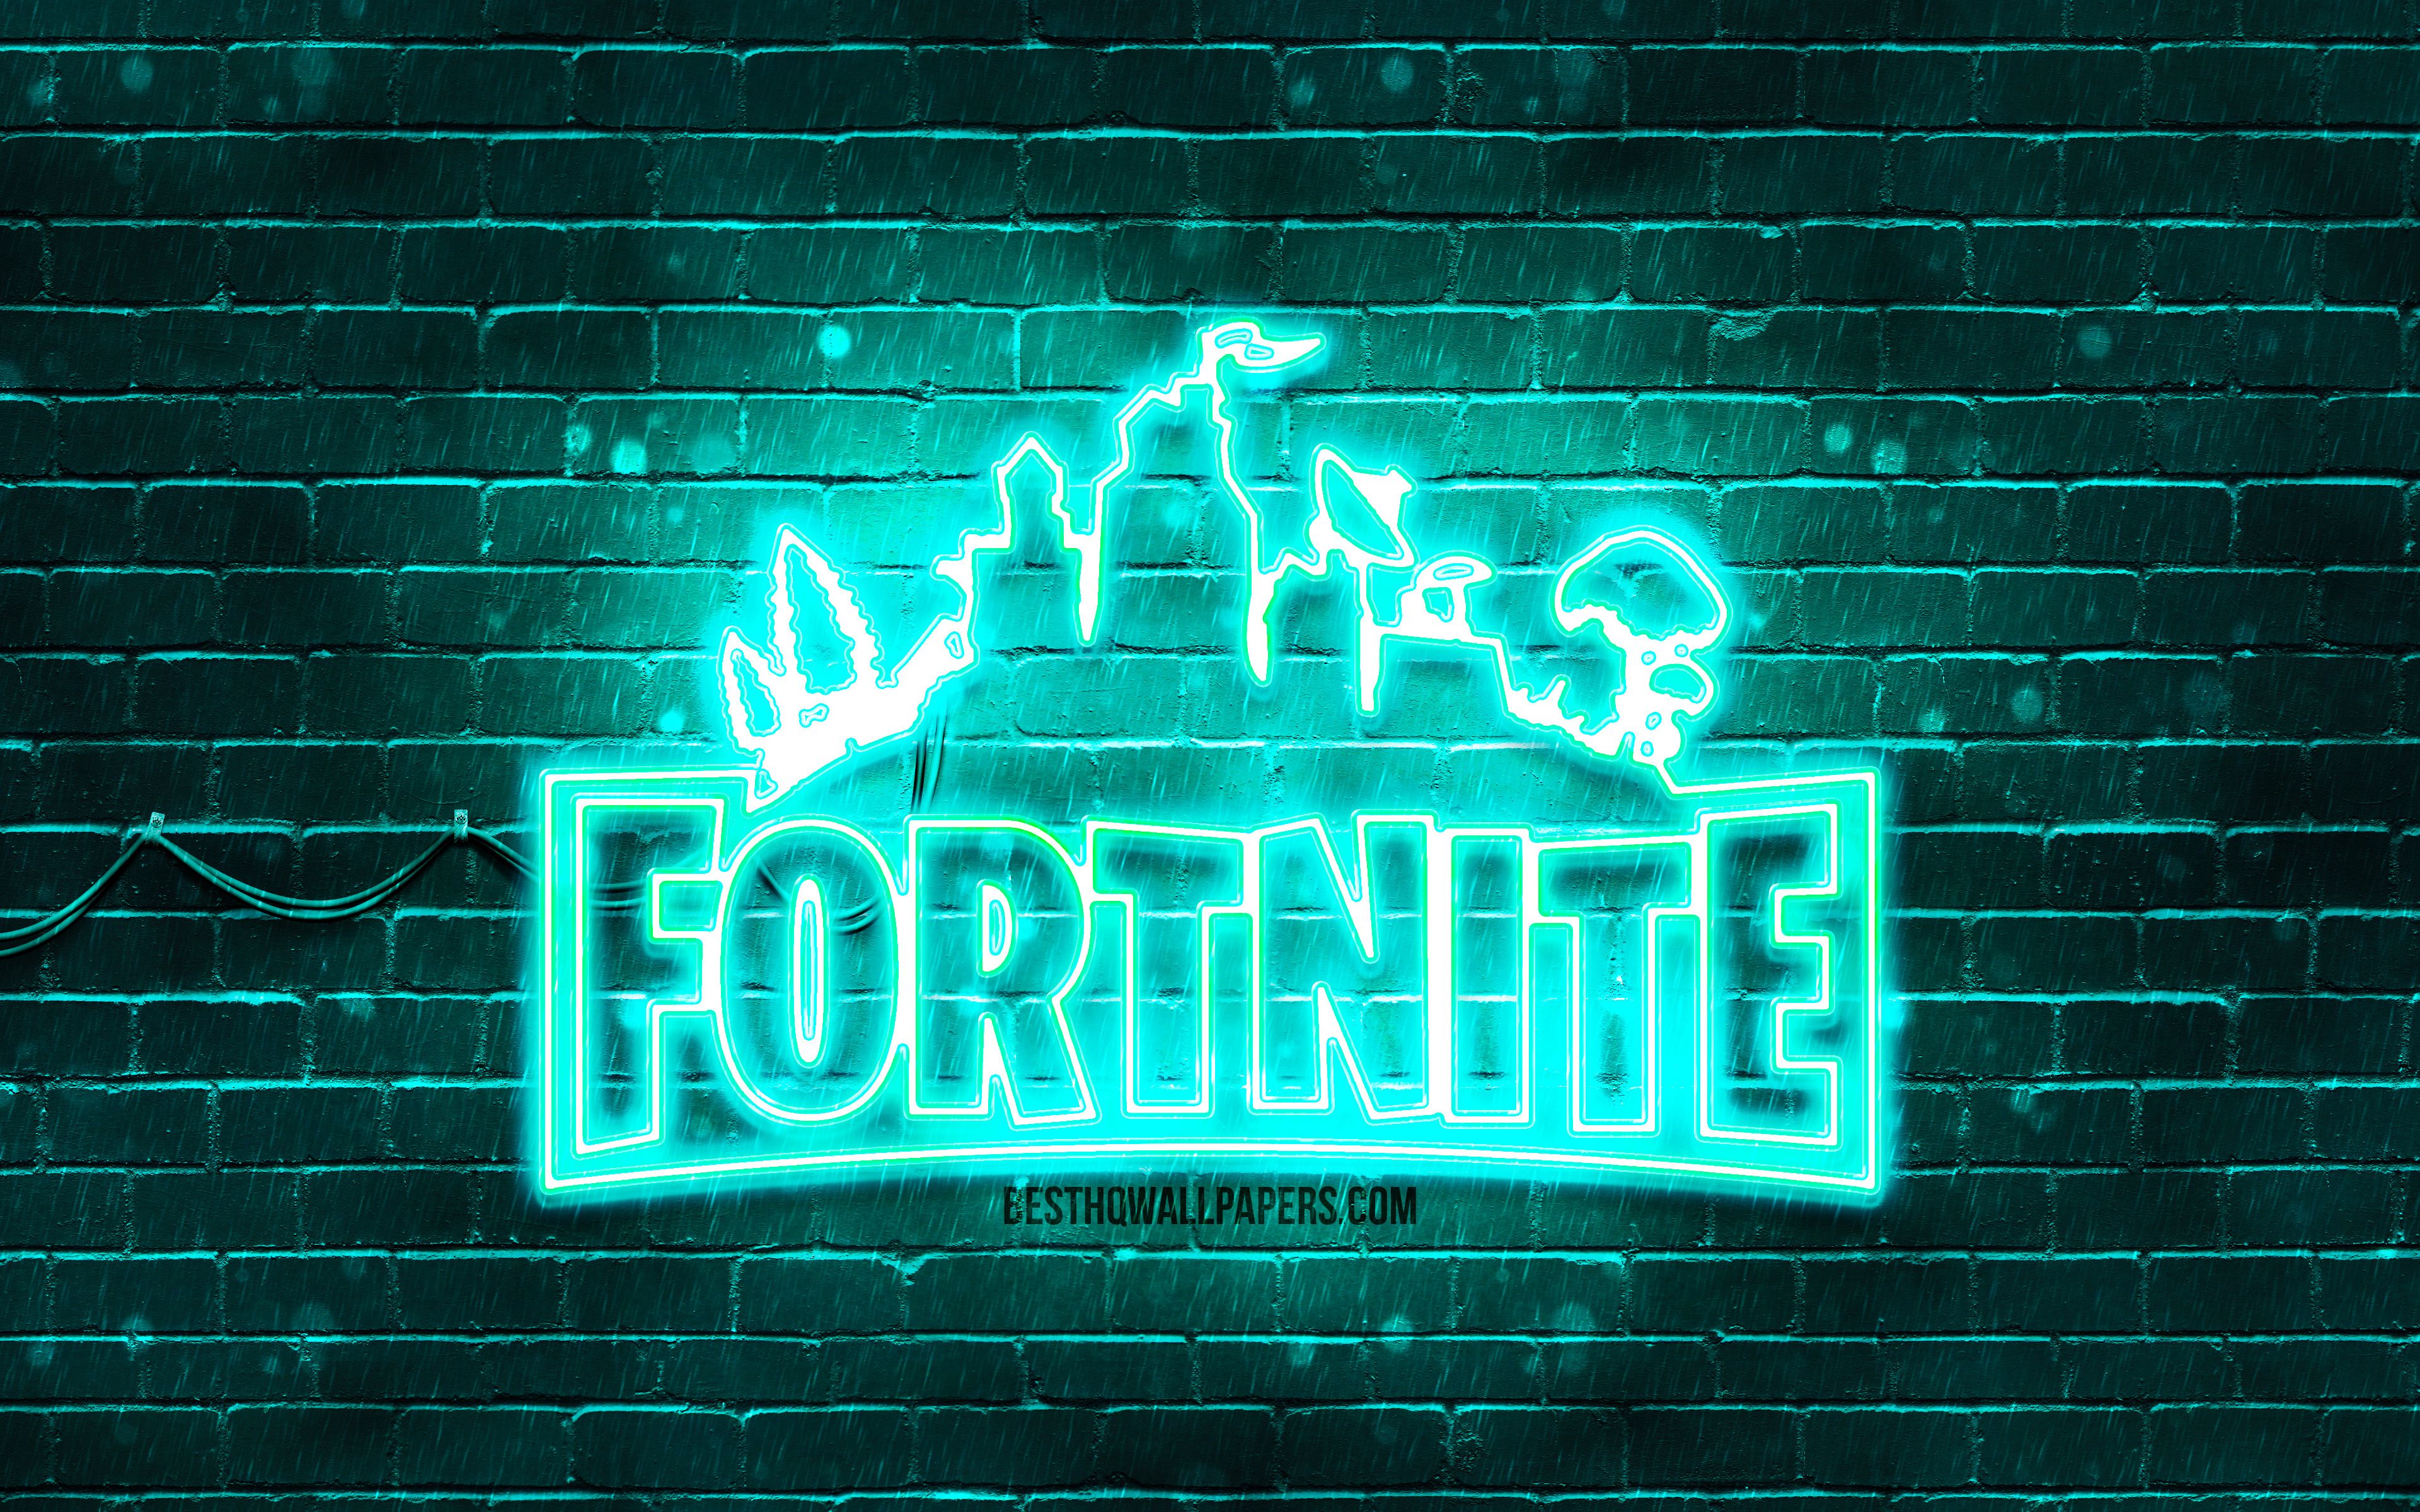 Download wallpaper Fortnite turquoise logo, 4k, turquoise